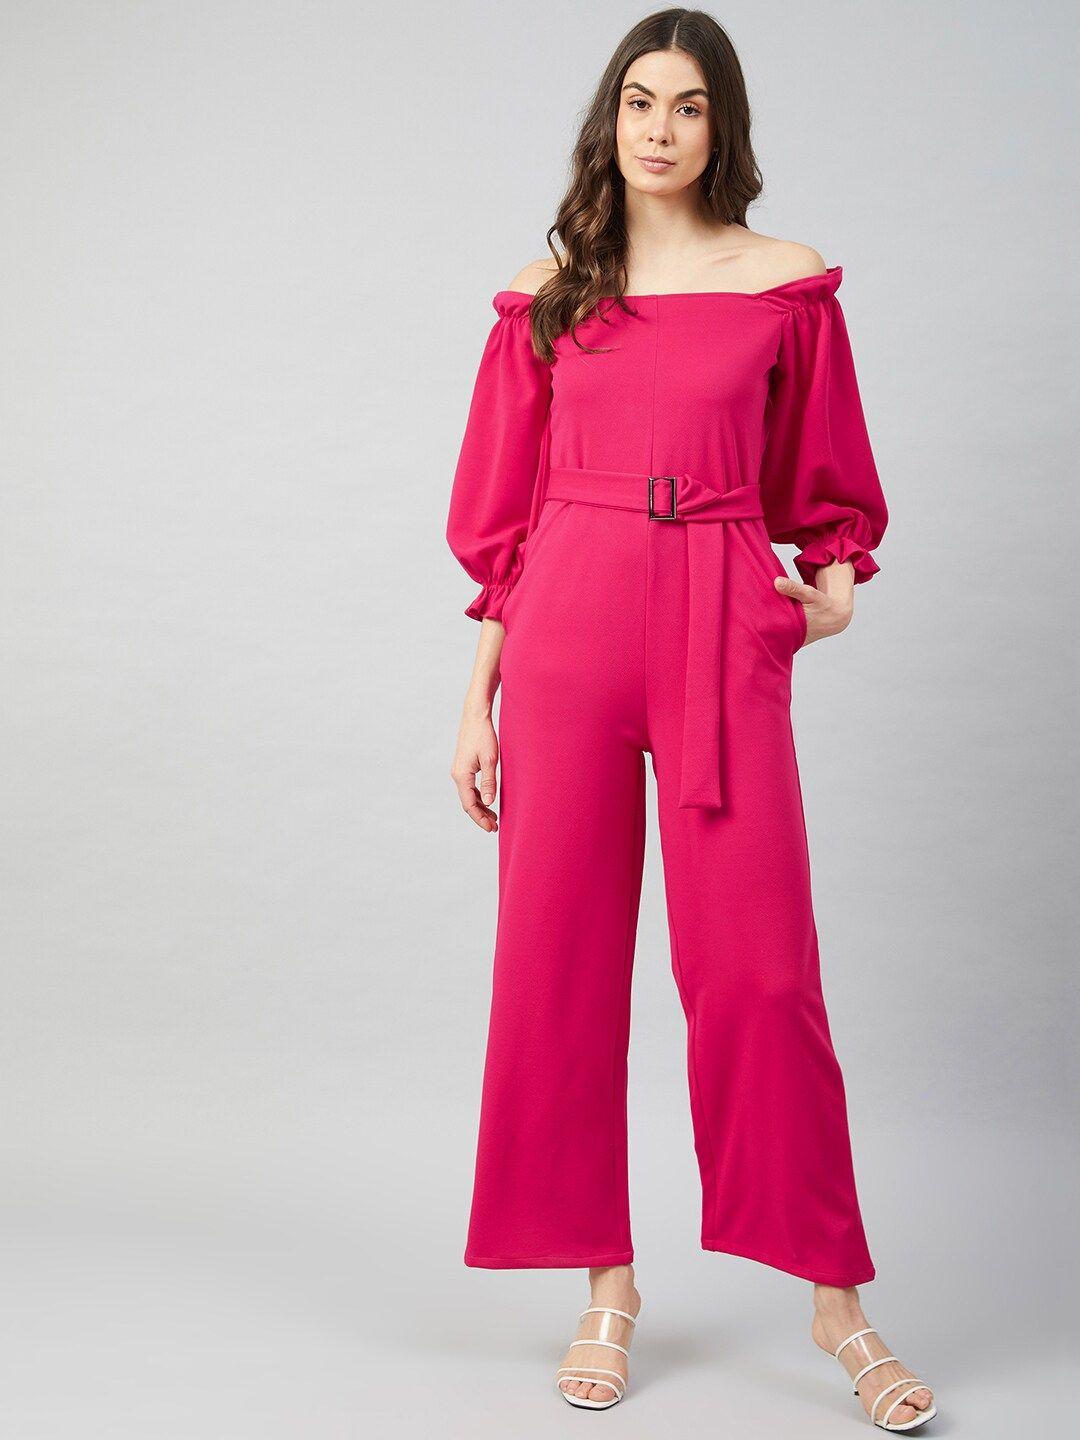 athena women fuchsia pink solid jumpsuit